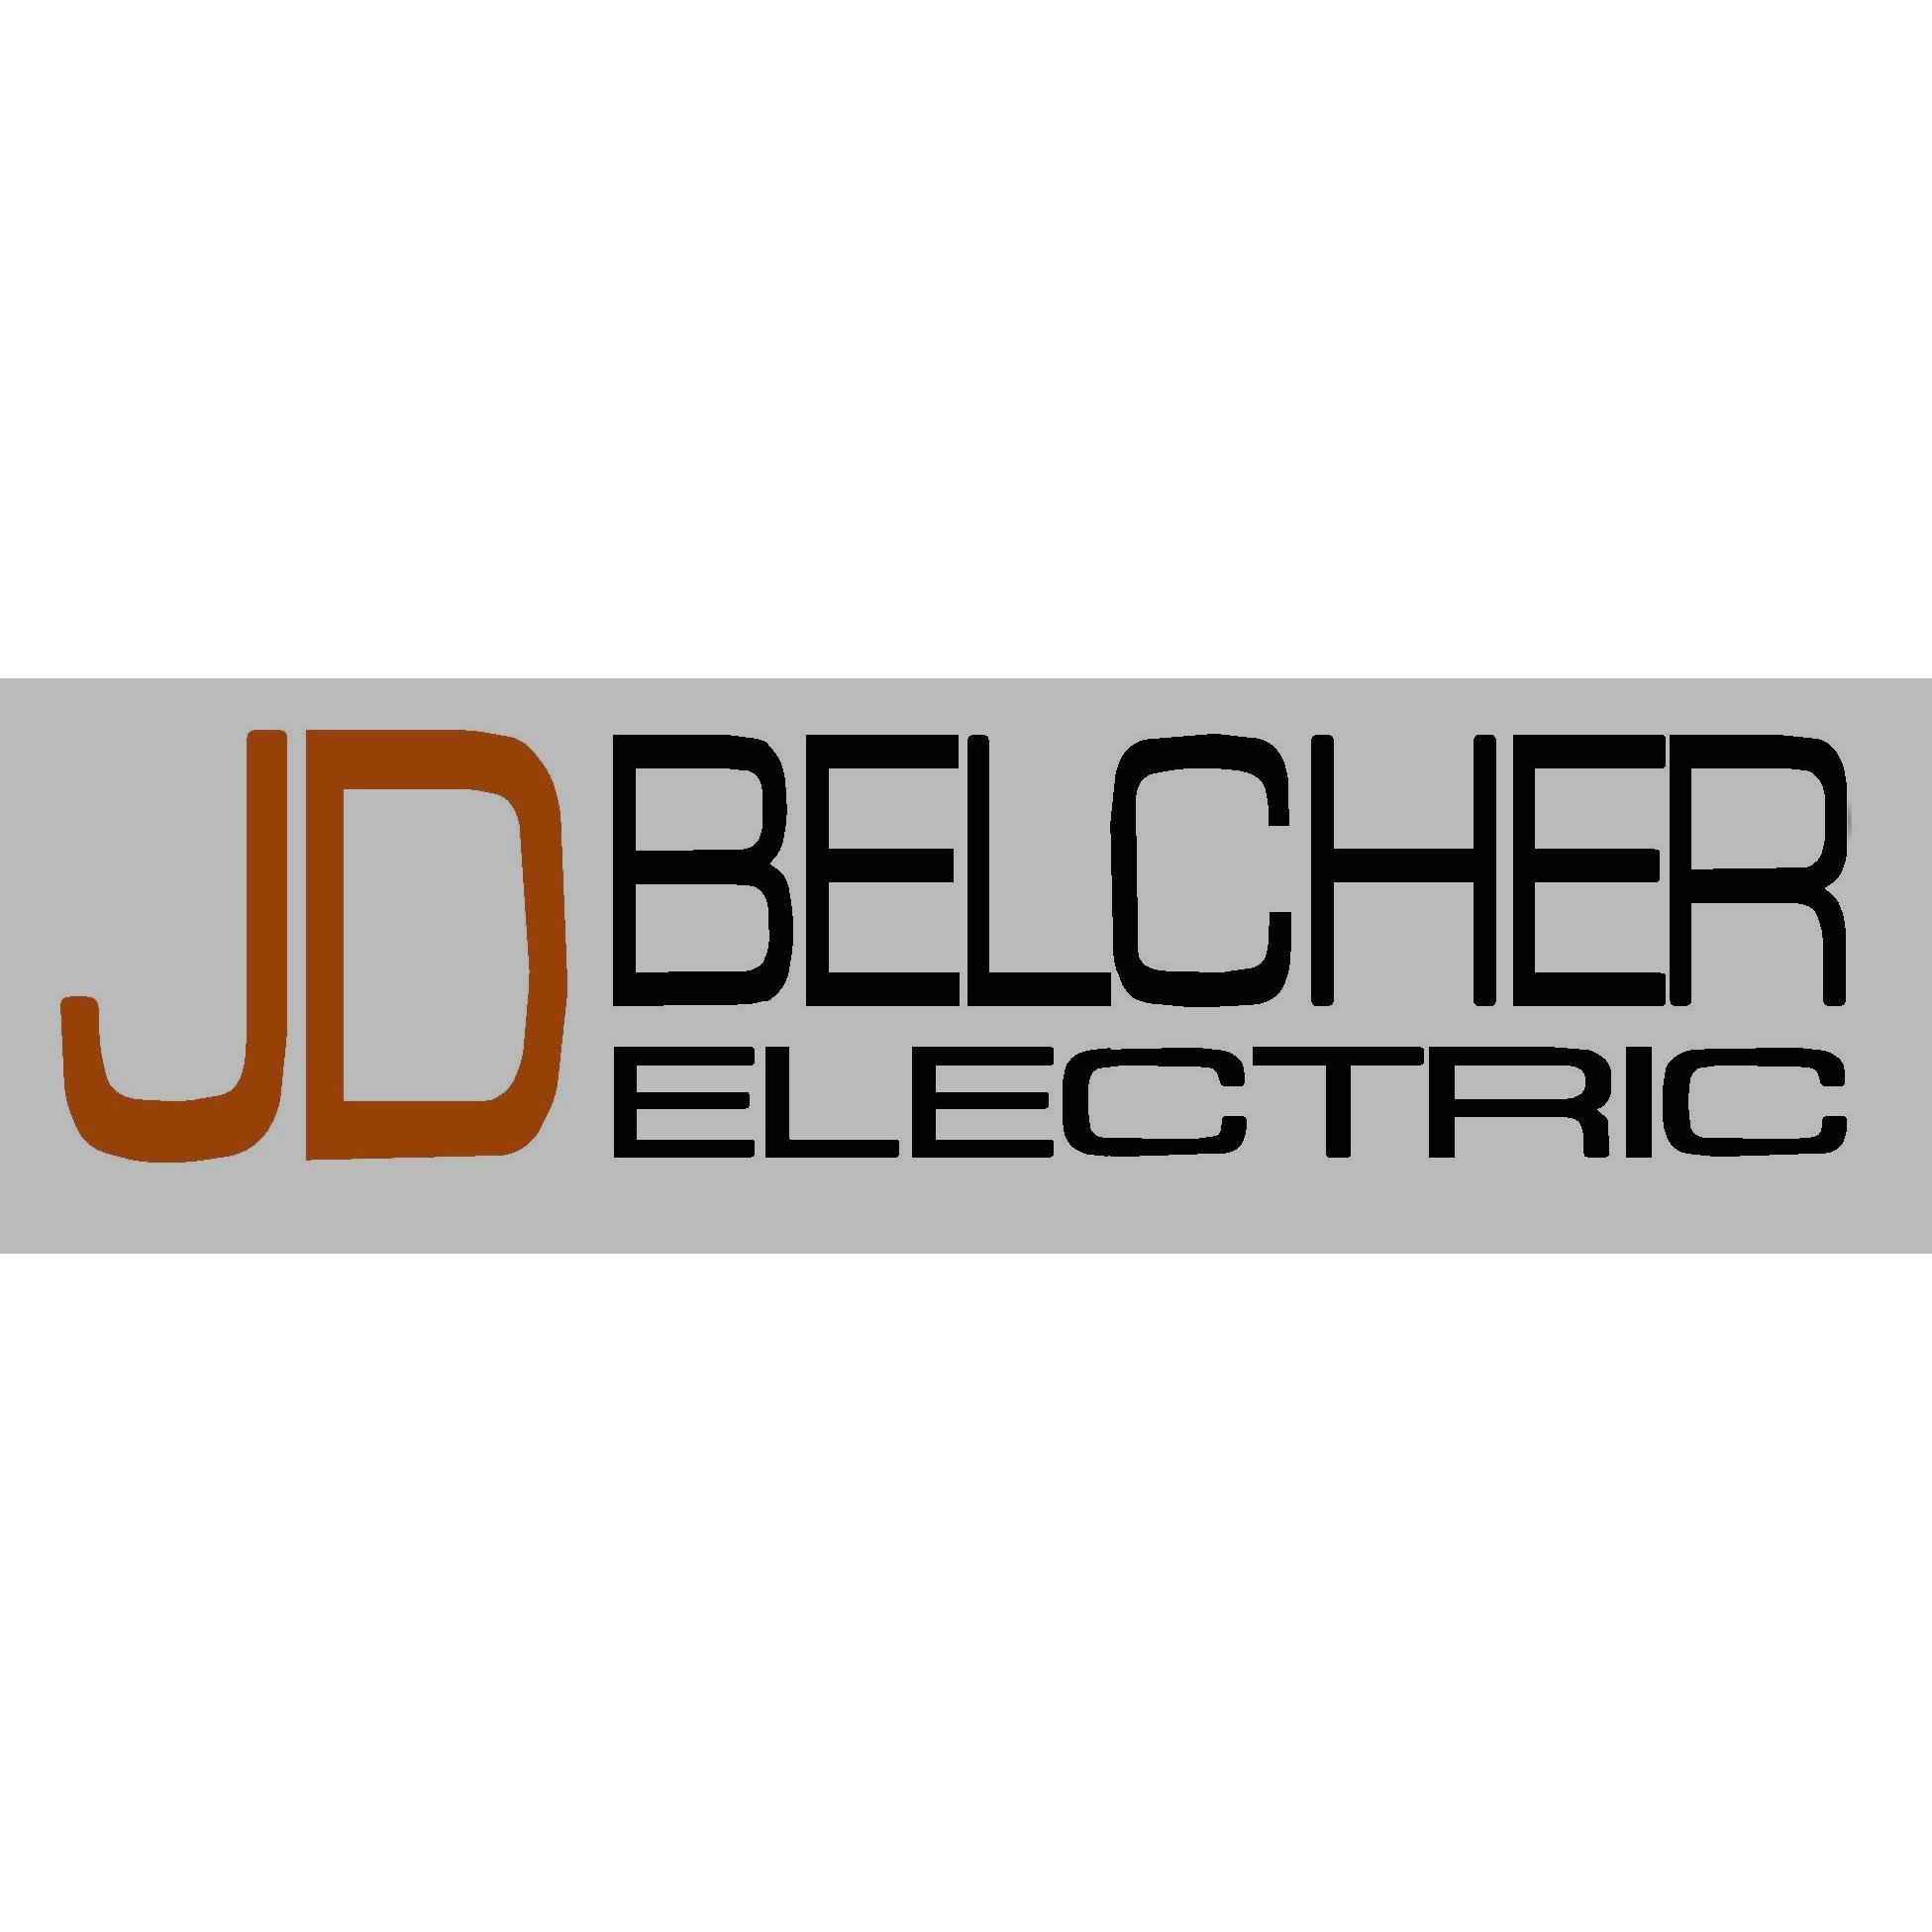 JD BELCHER ELECTRIC